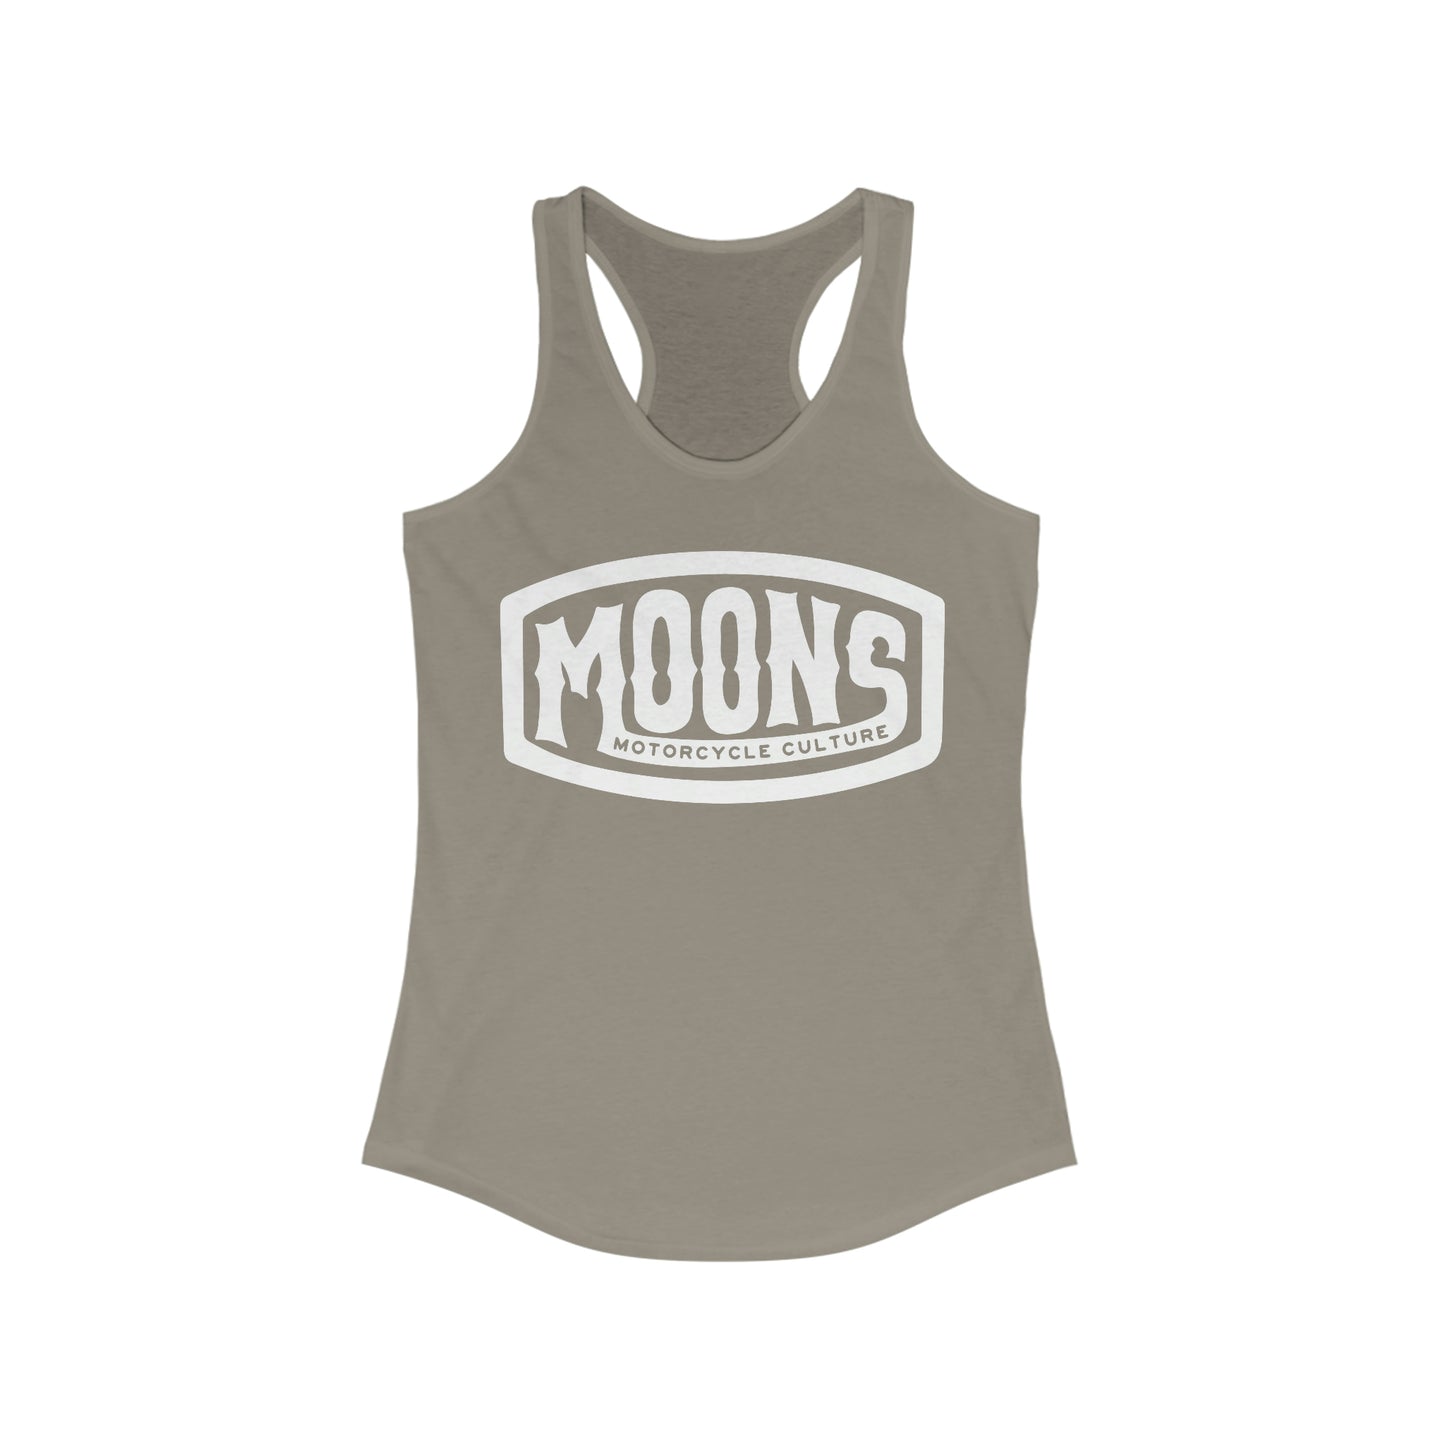 MOONSMC Vintage Badge Women's Racerback Tank Top